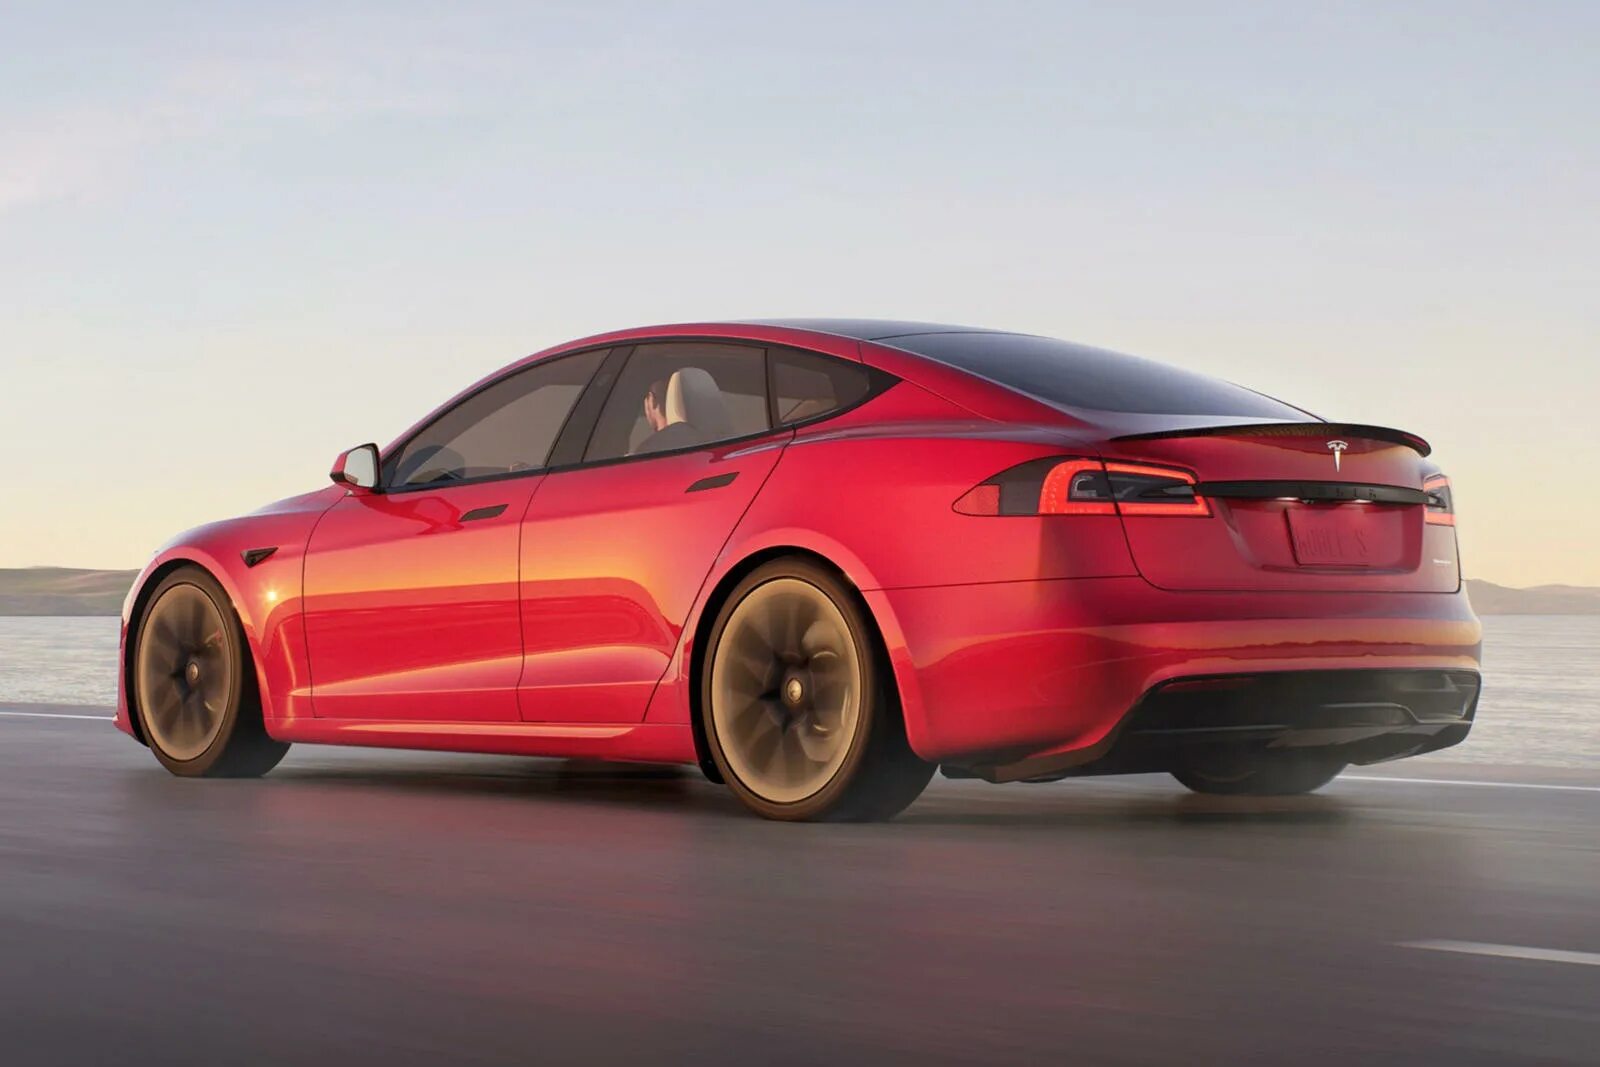 Tesla model s Plaid 2021. Тесла model s Plaid 2021. Новая Тесла 2021 model s Plaid. Tesla model s Plaid. Model x plaid